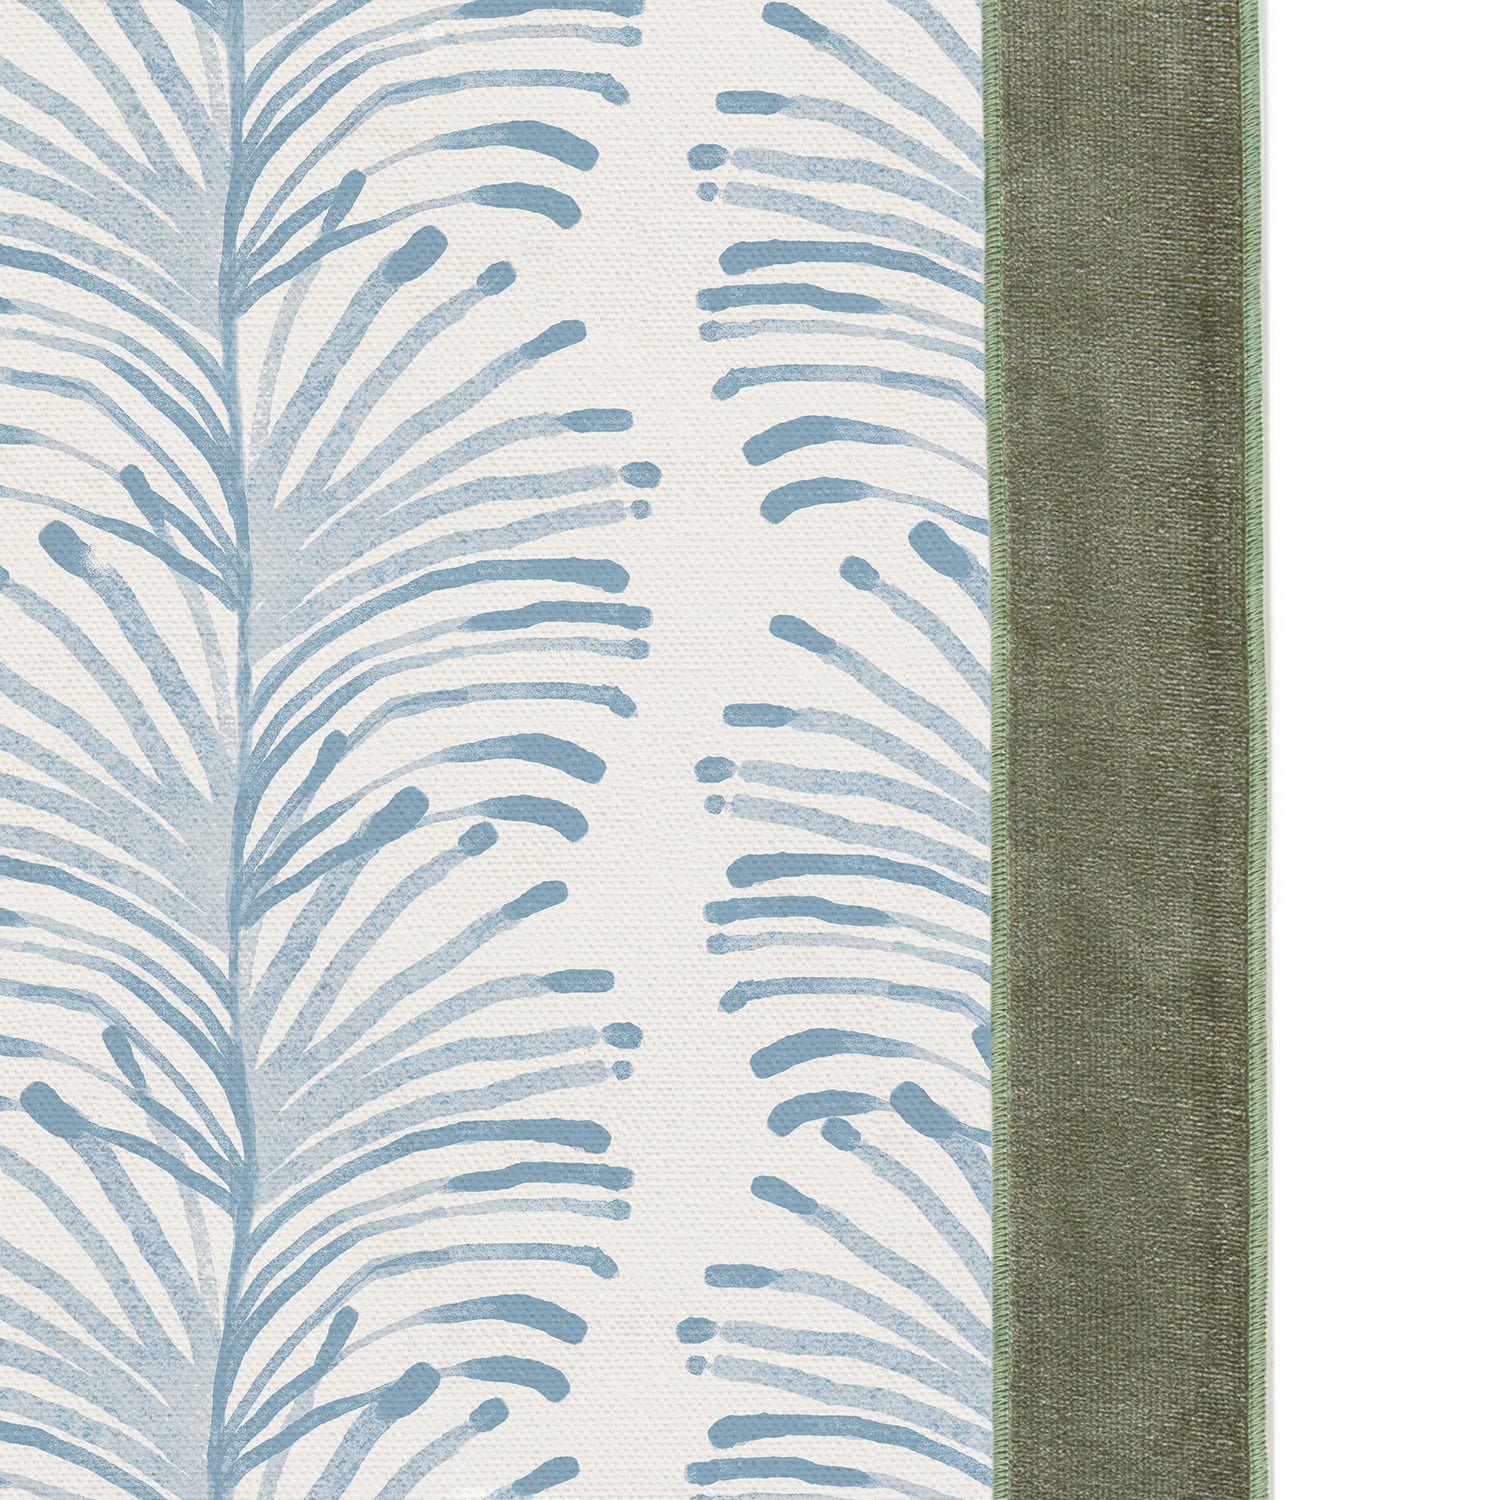 Upclose picture of Emma Sky custom Sky Blue Botanical Stripecurtain with fern velvet band trim